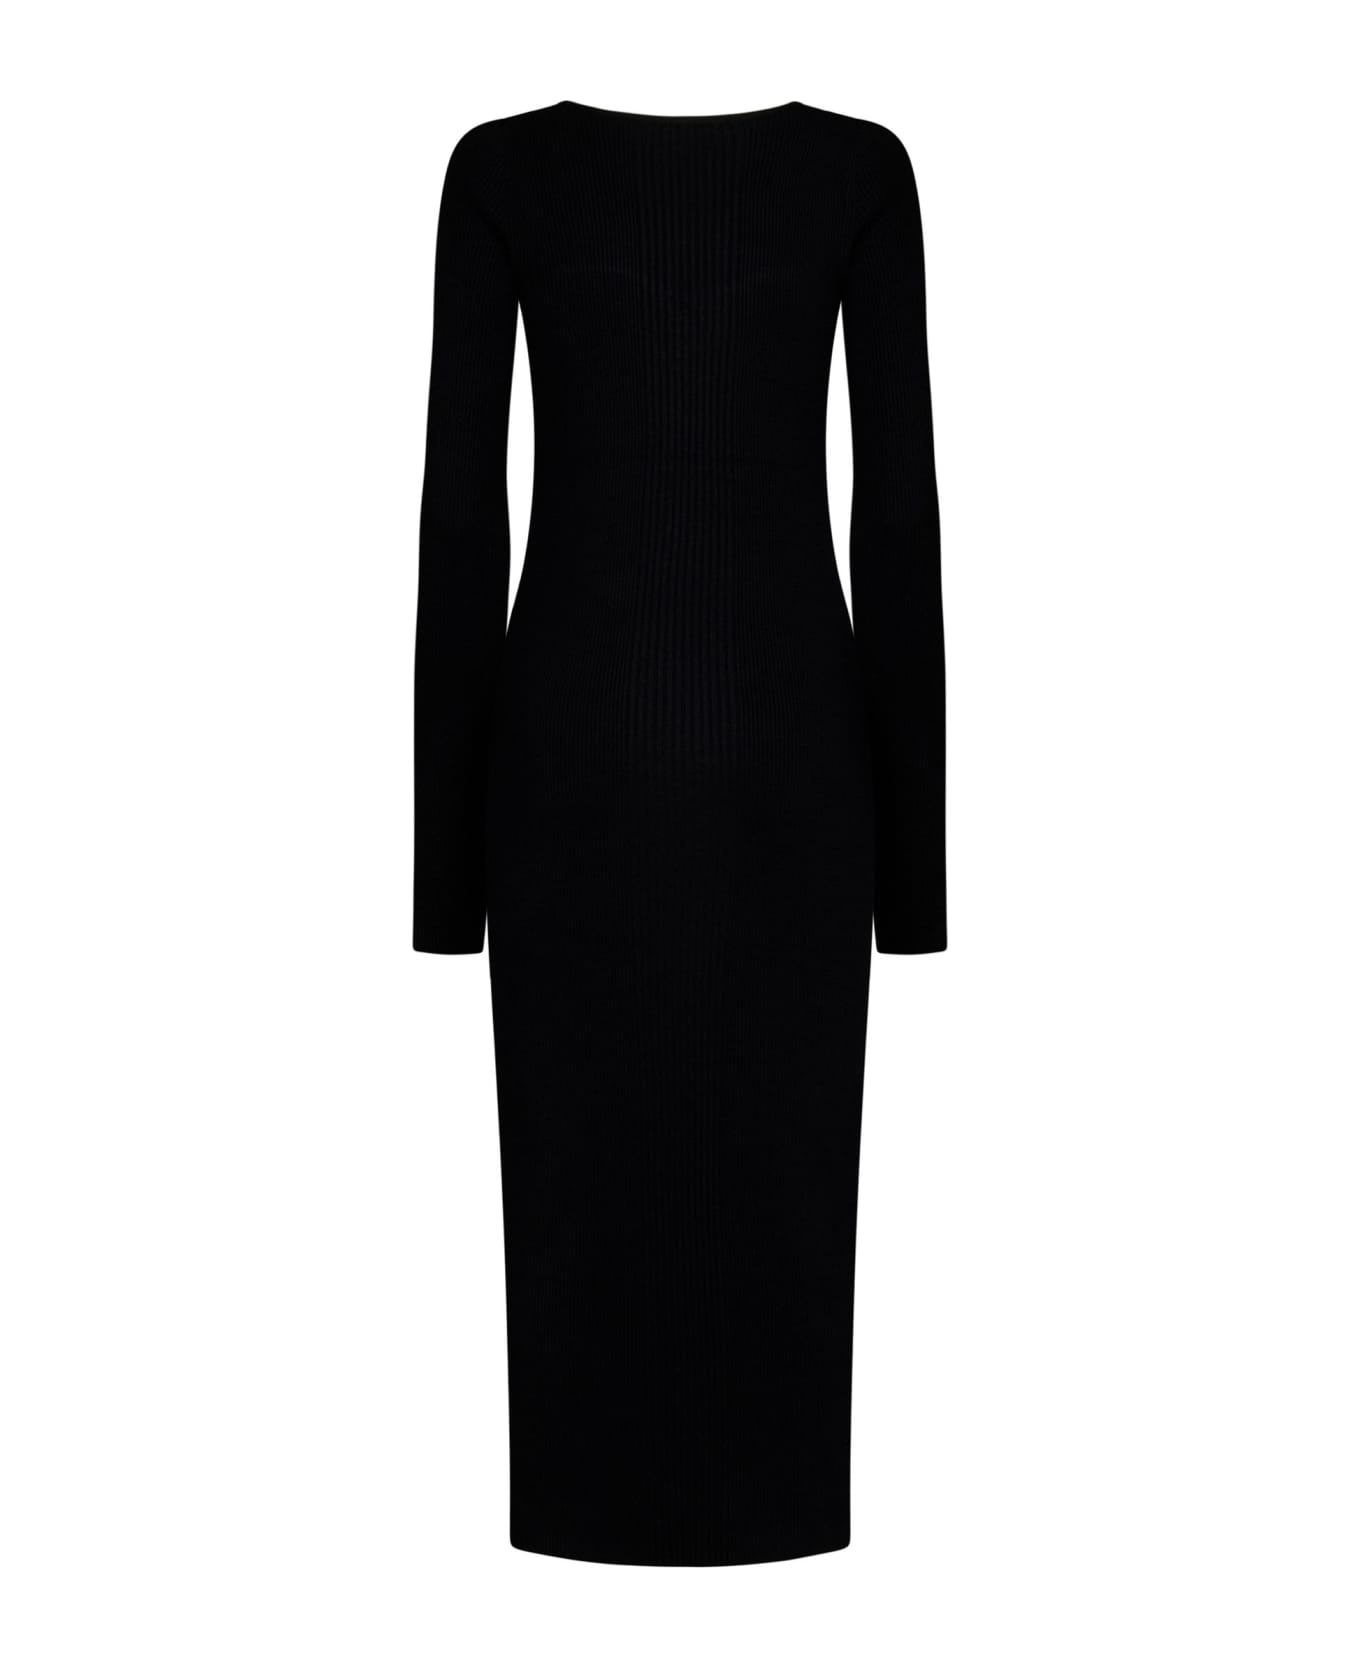 REMAIN Birger Christensen Dress - Black ワンピース＆ドレス